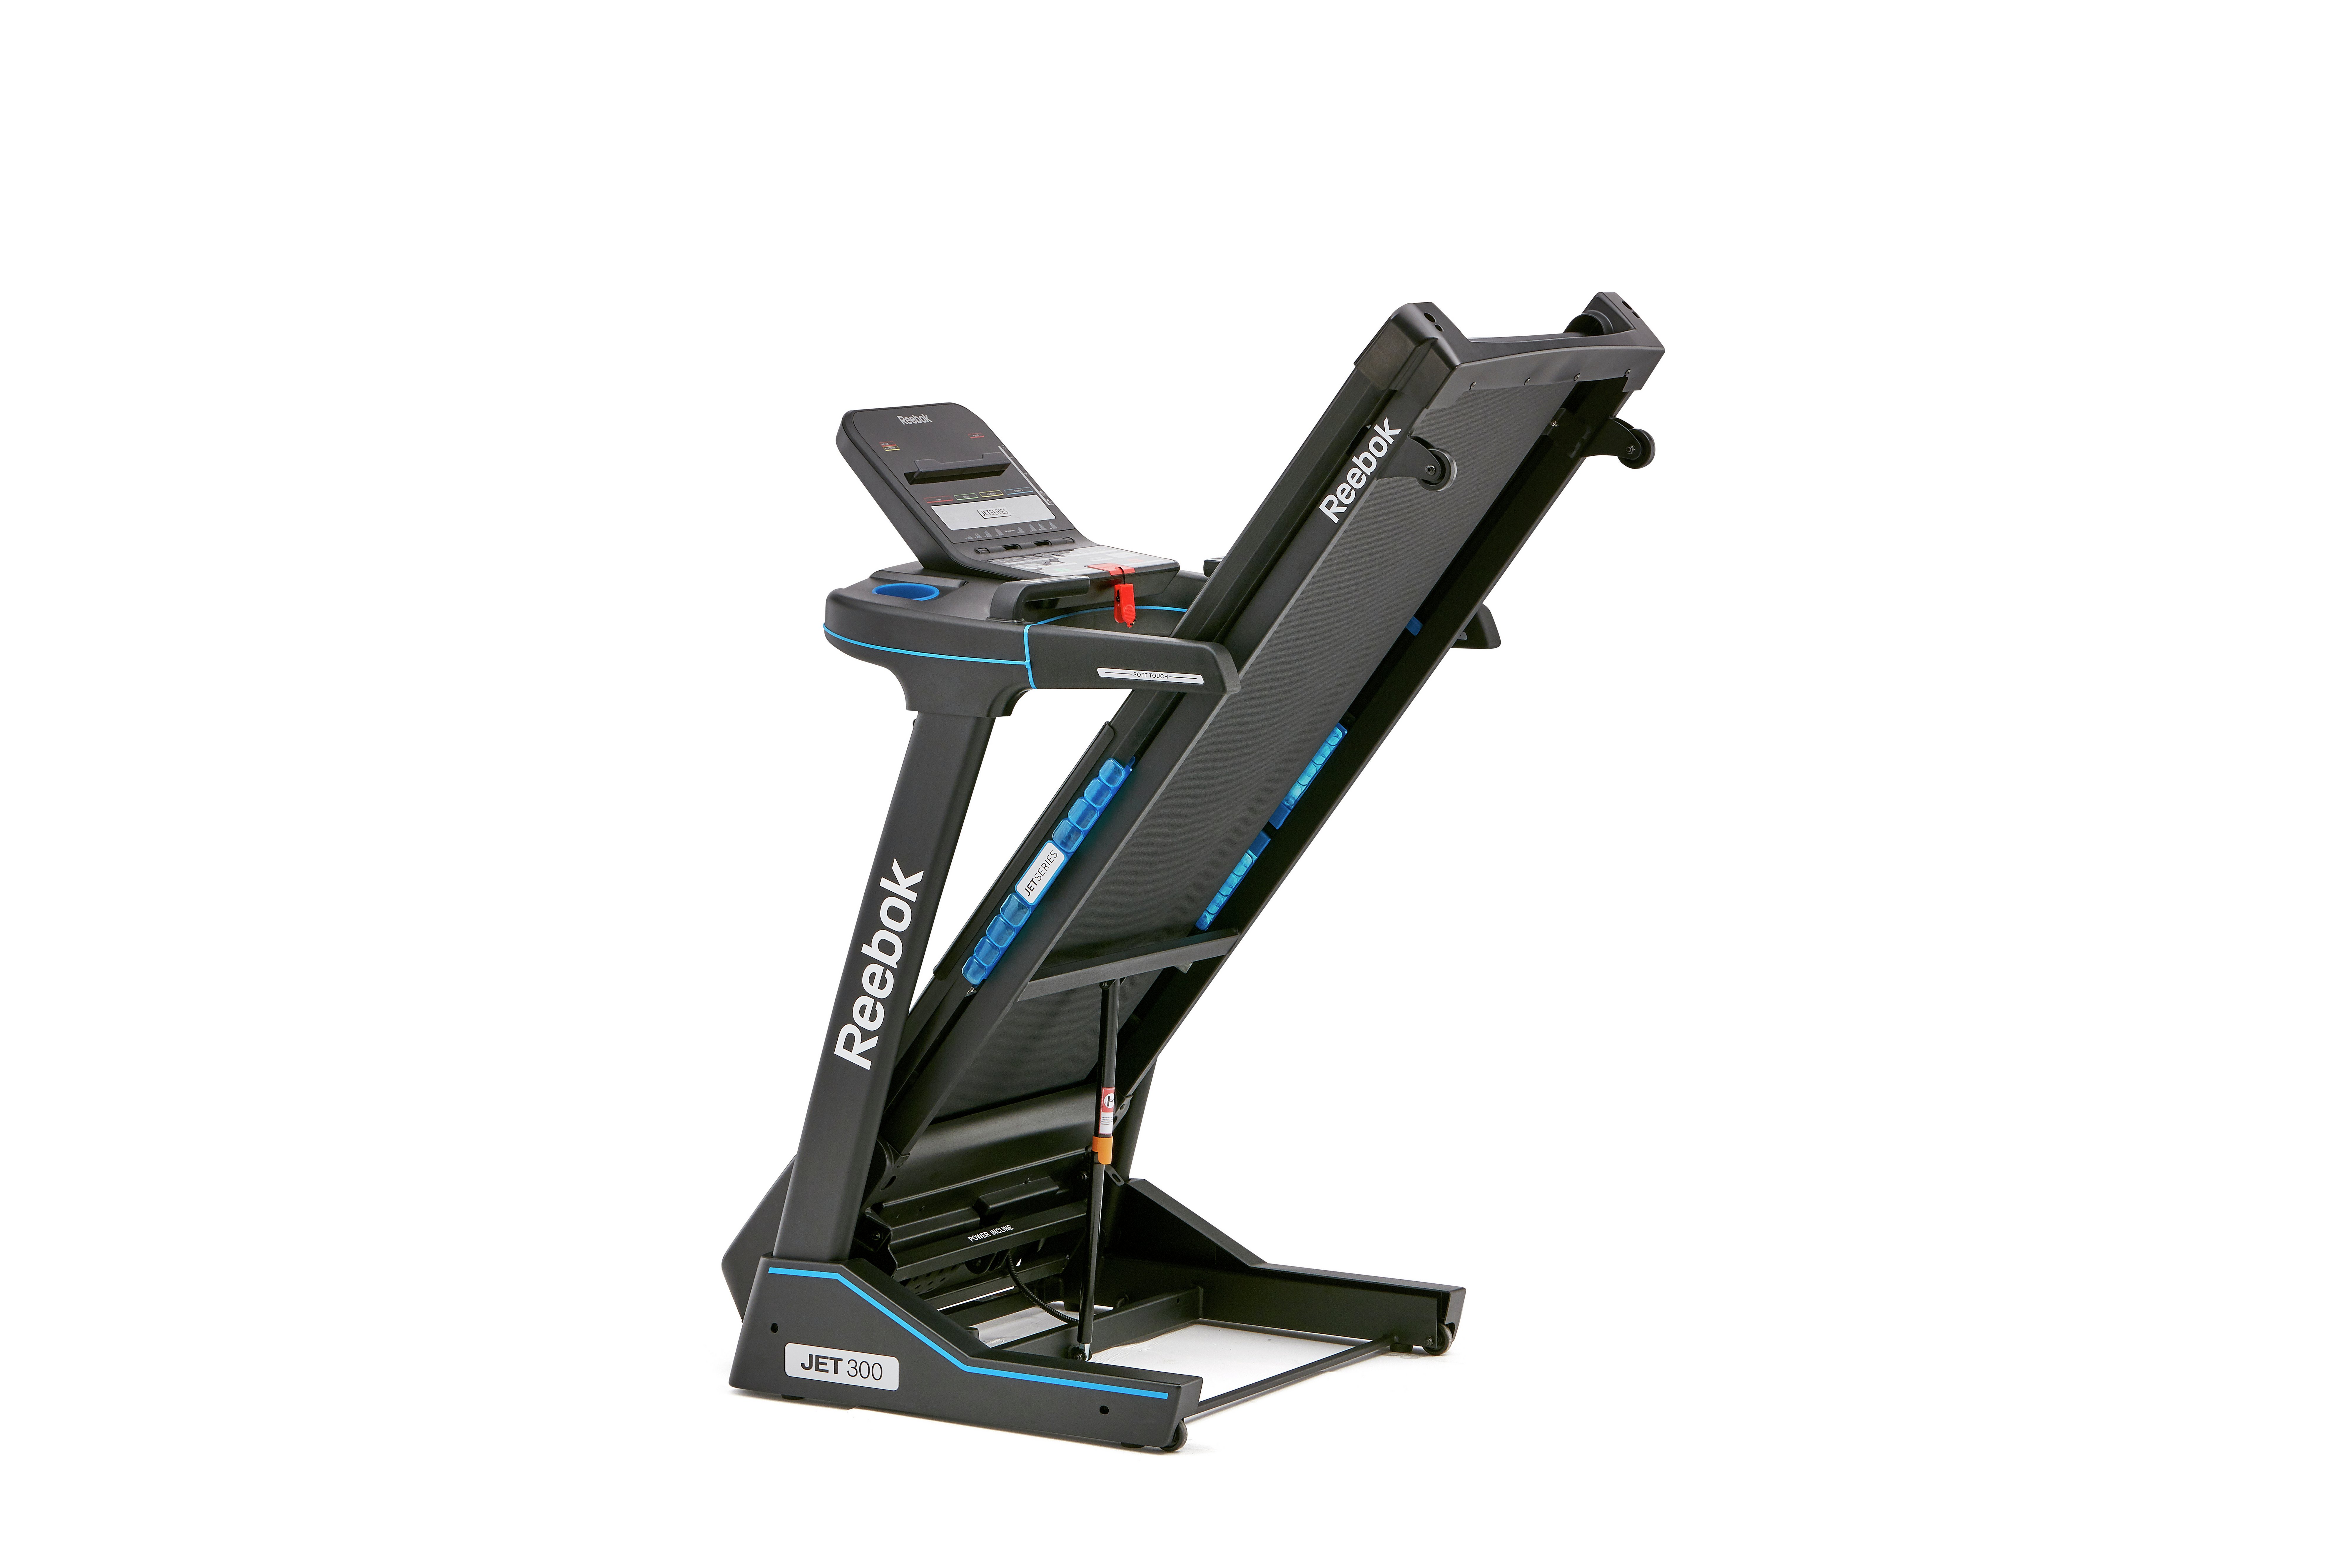 Buy Reebok Jet 300 Treadmill 